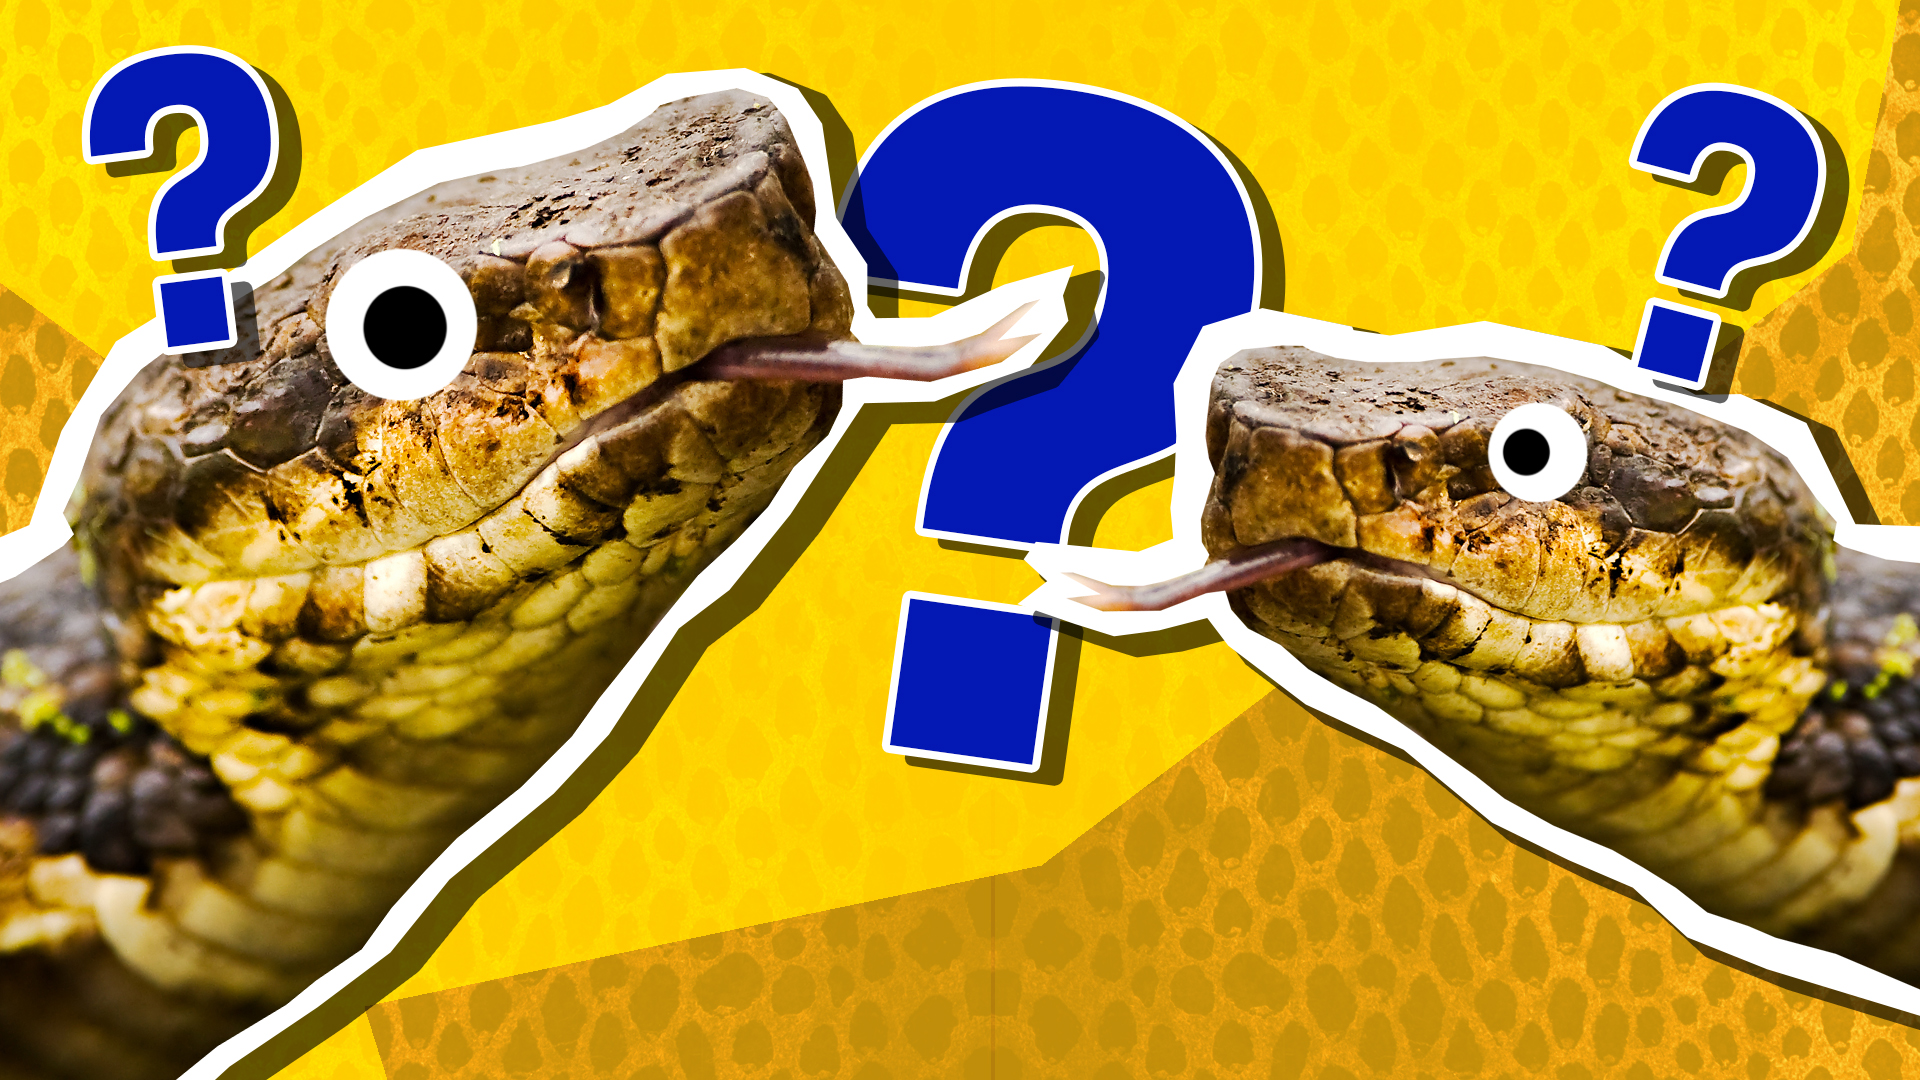 Swamp snake quiz